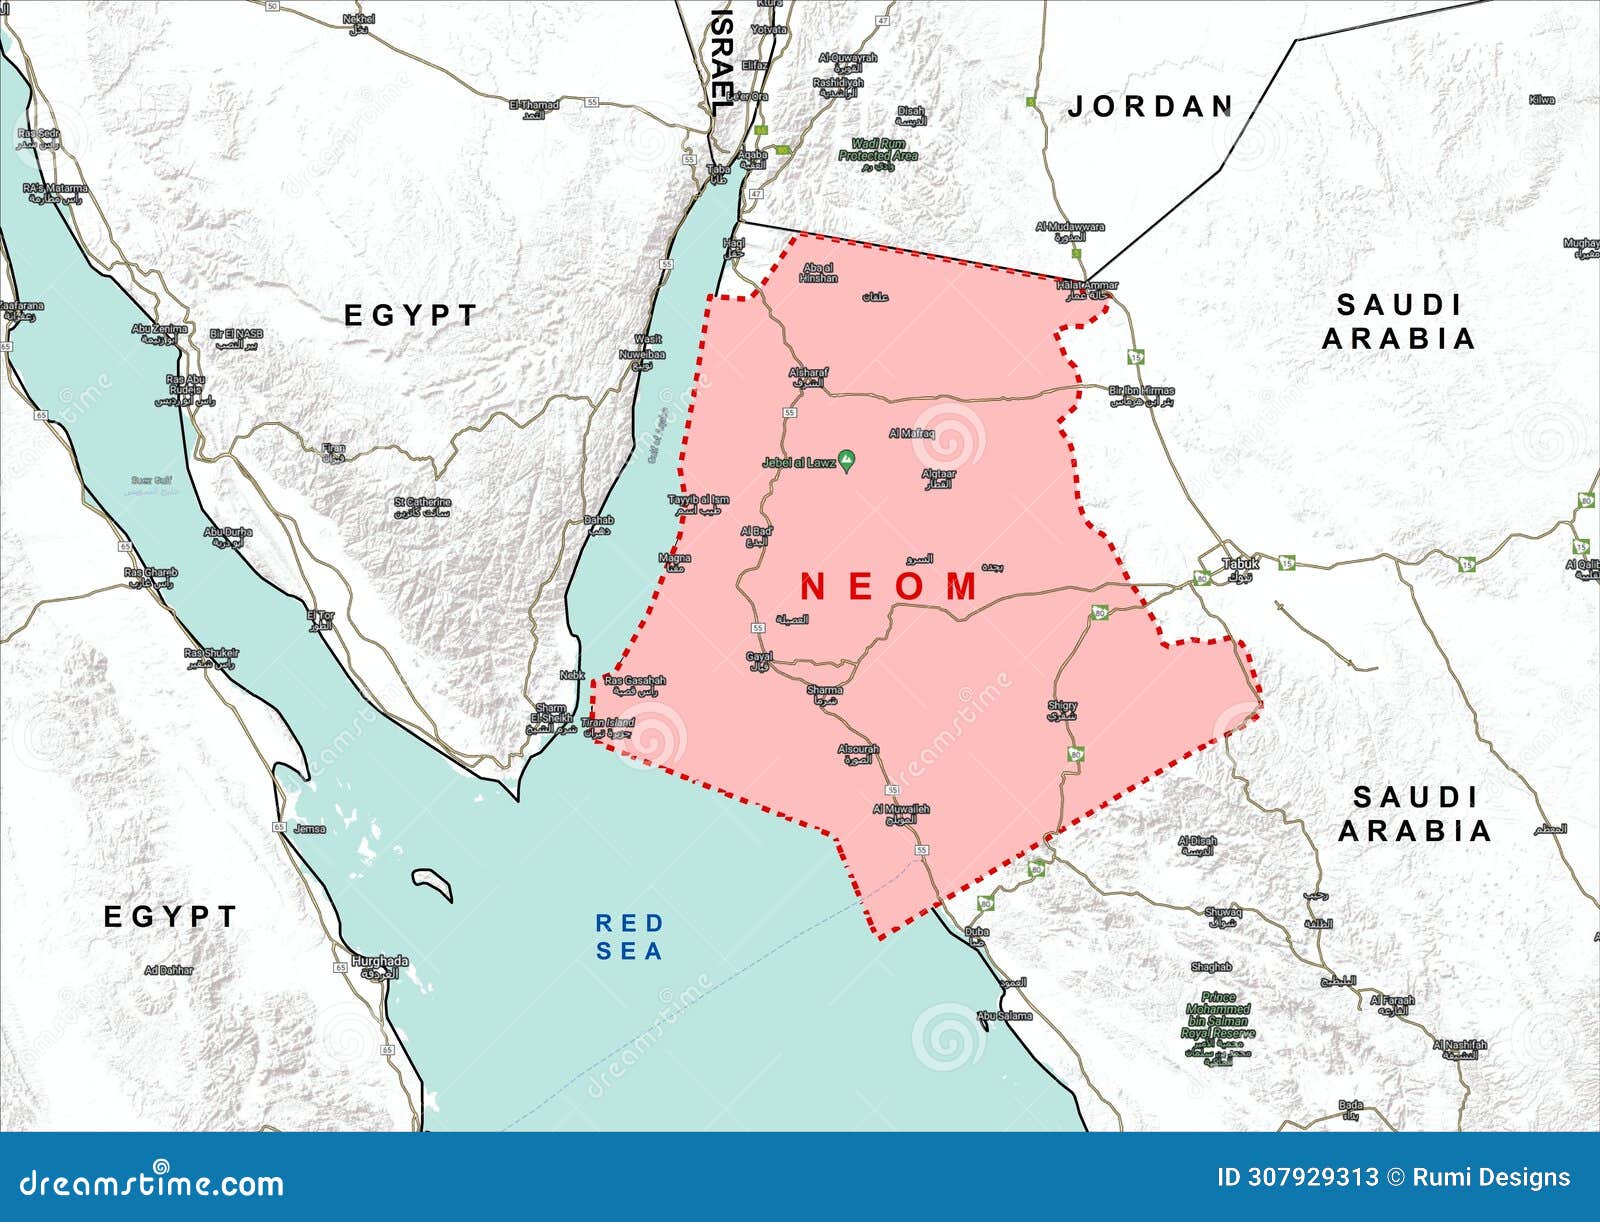 neom city tabuk province saudi arabia administrative map